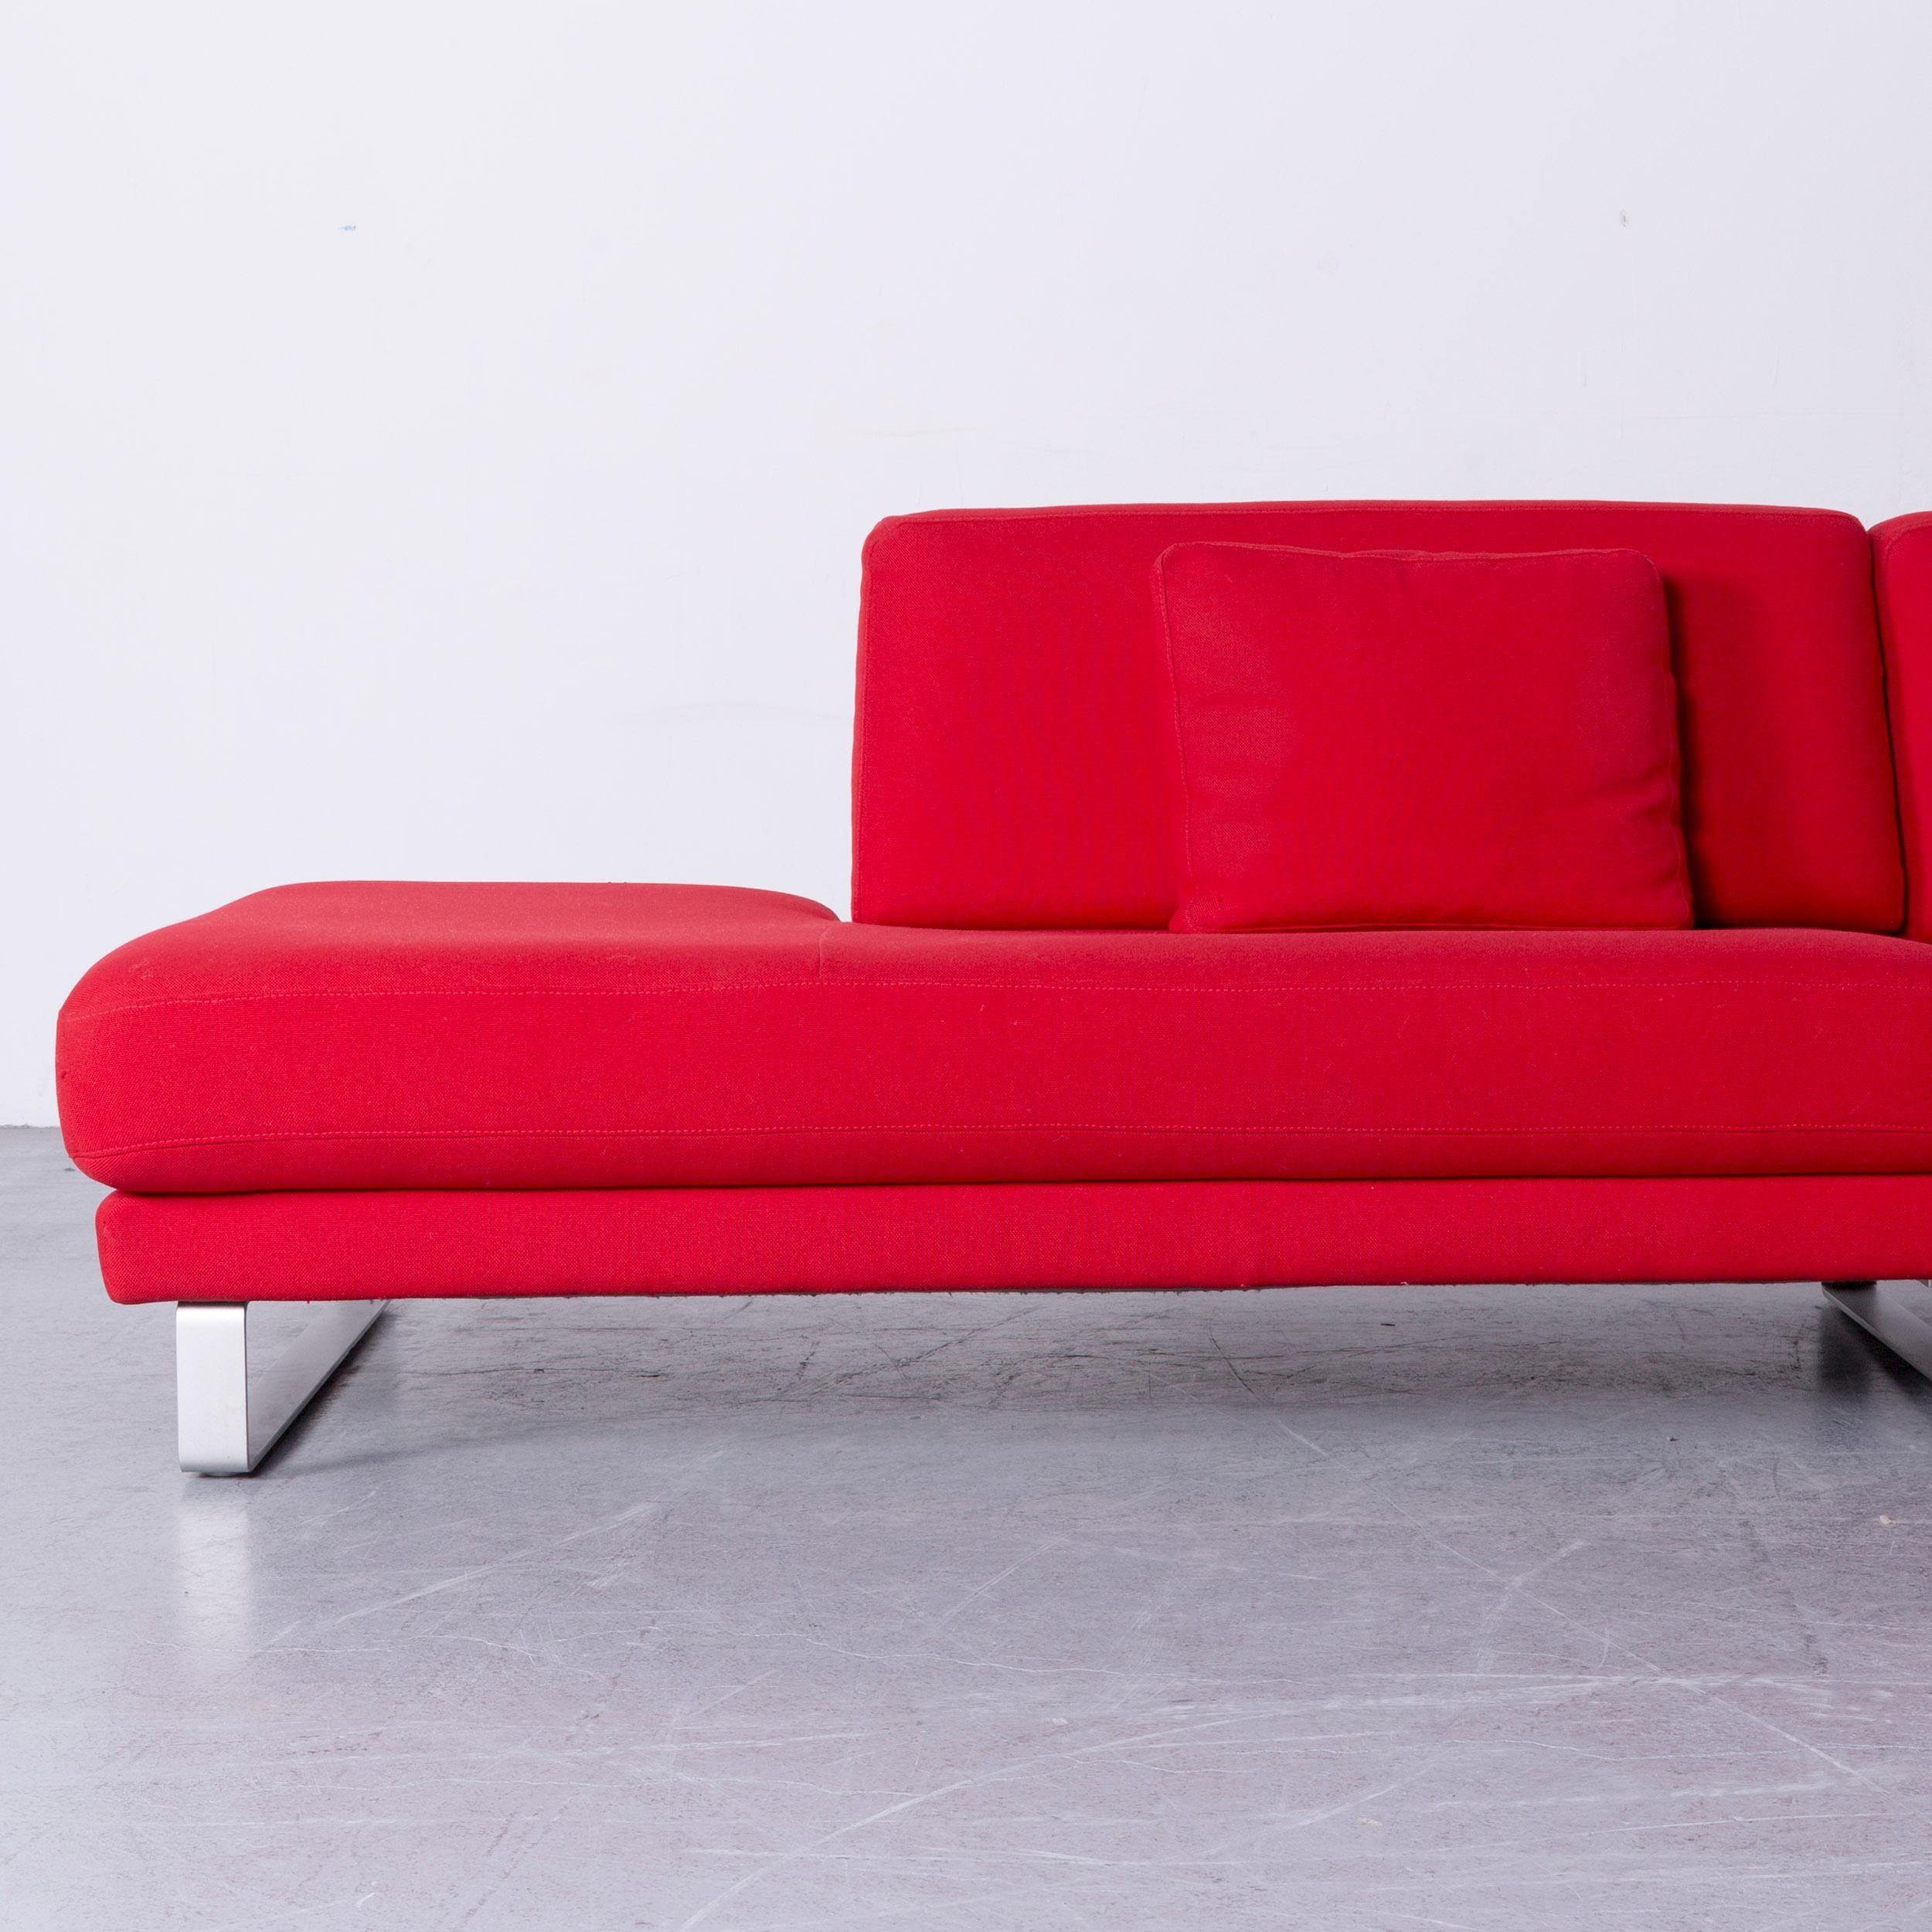 German Rolf Benz Designer Ego Fabricr Corner-Sofa Red Four-Seat Couch For Sale